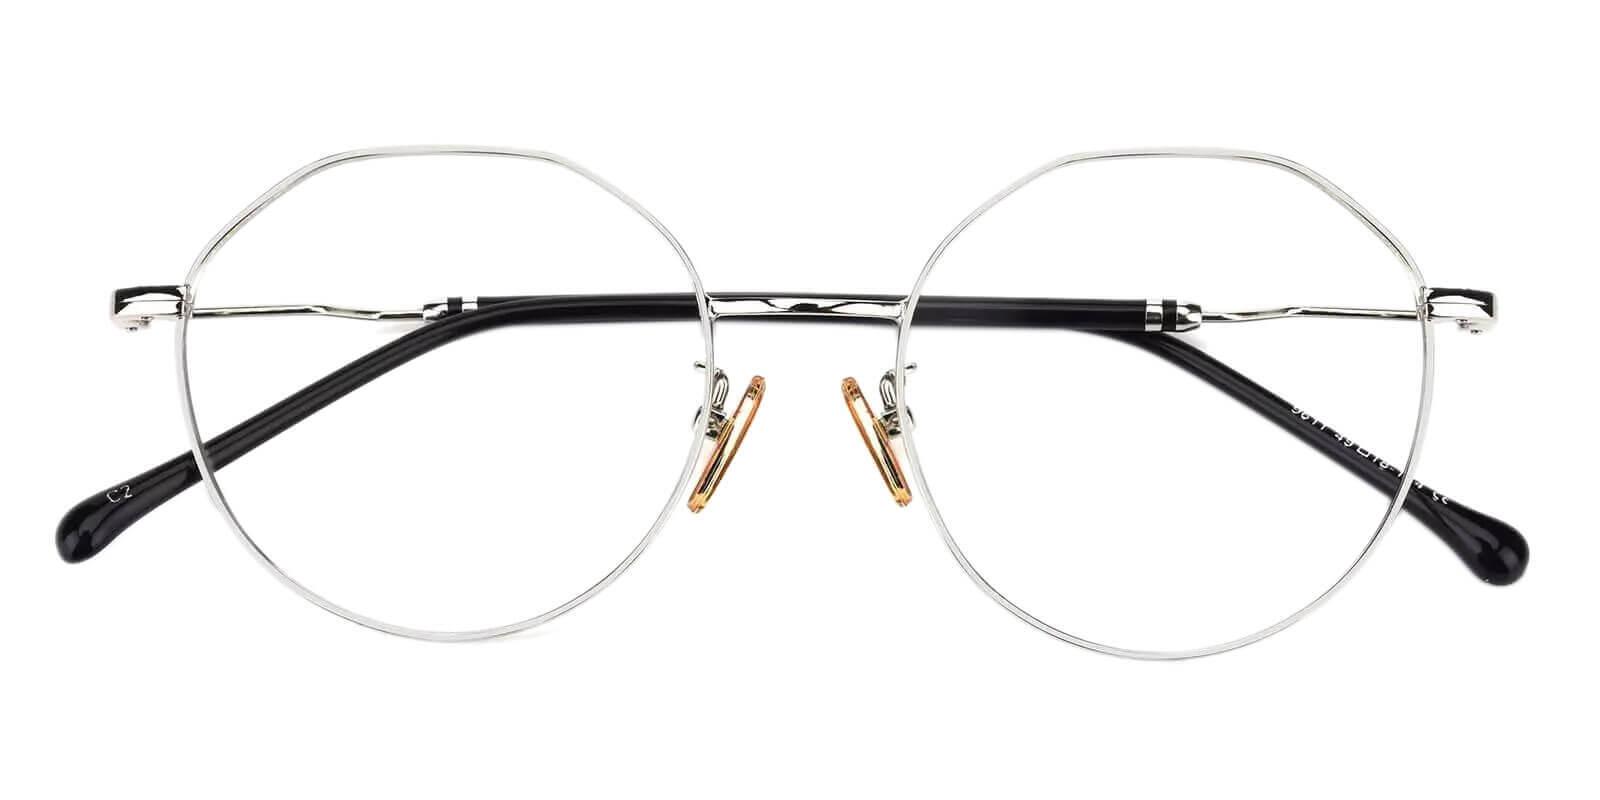 Kawk Silver Metal Eyeglasses , NosePads Frames from ABBE Glasses